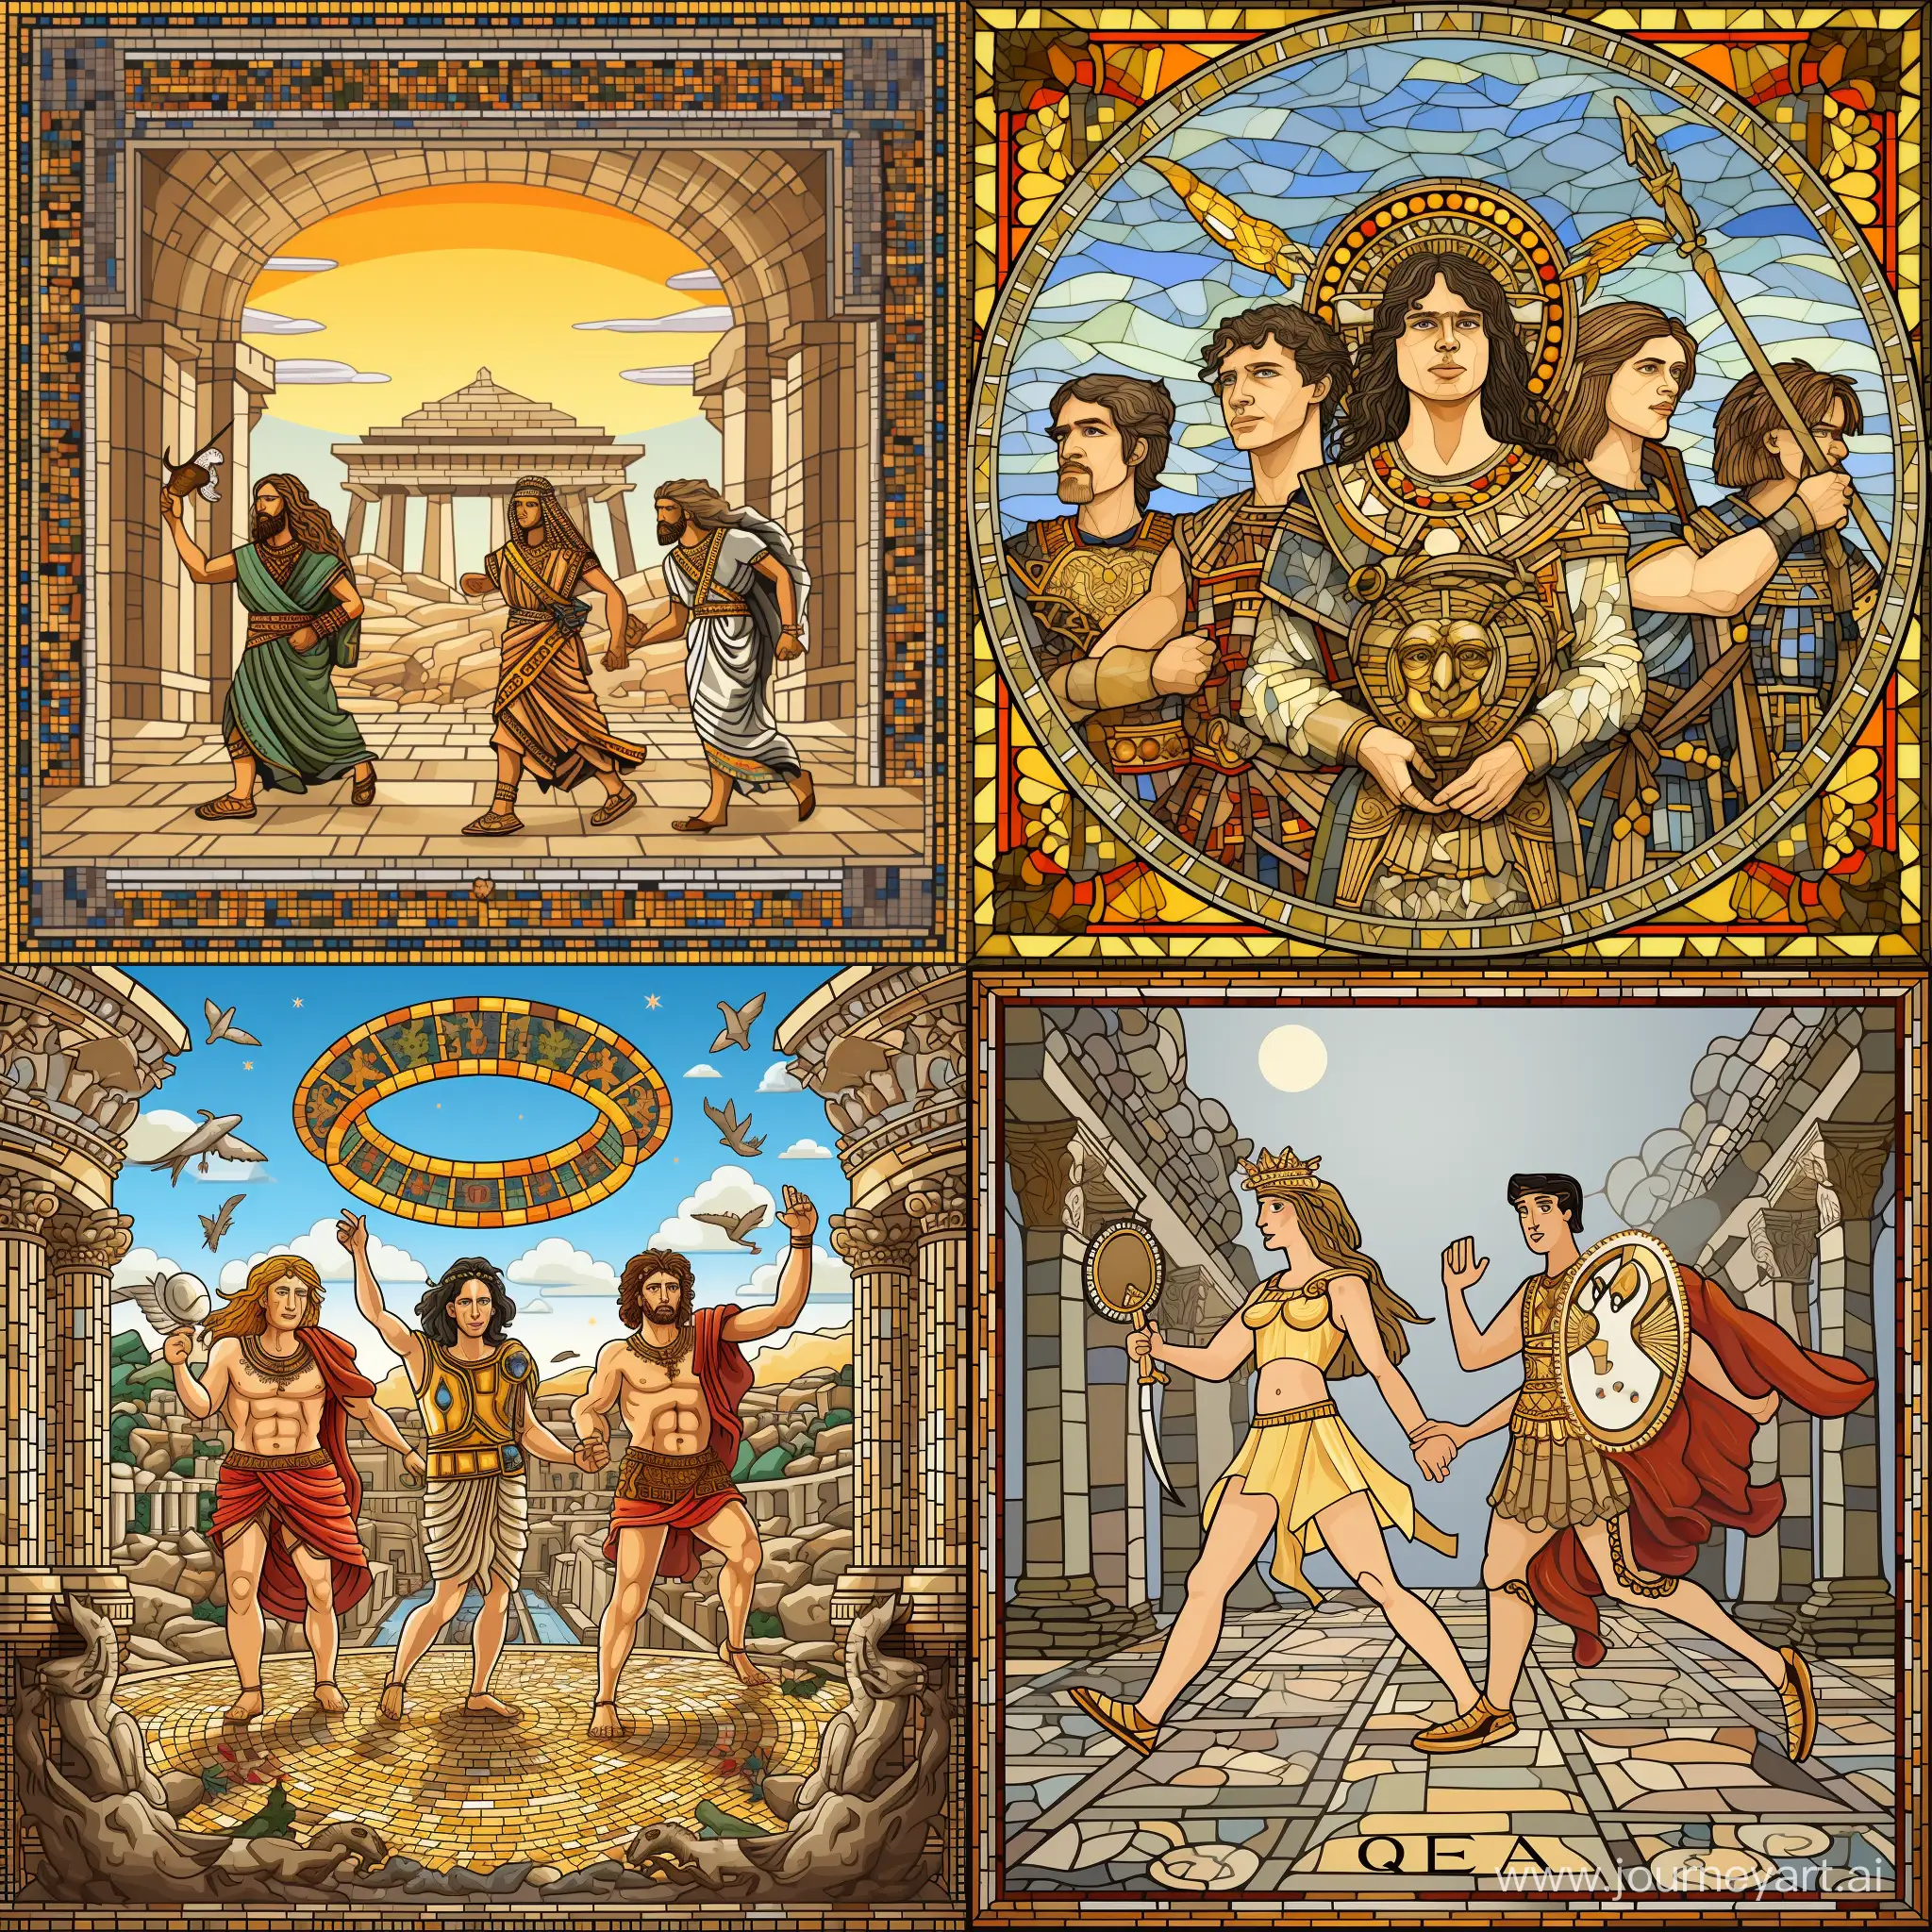 Queen-Cover-Album-Roman-Mosaic-in-Cartoon-Style